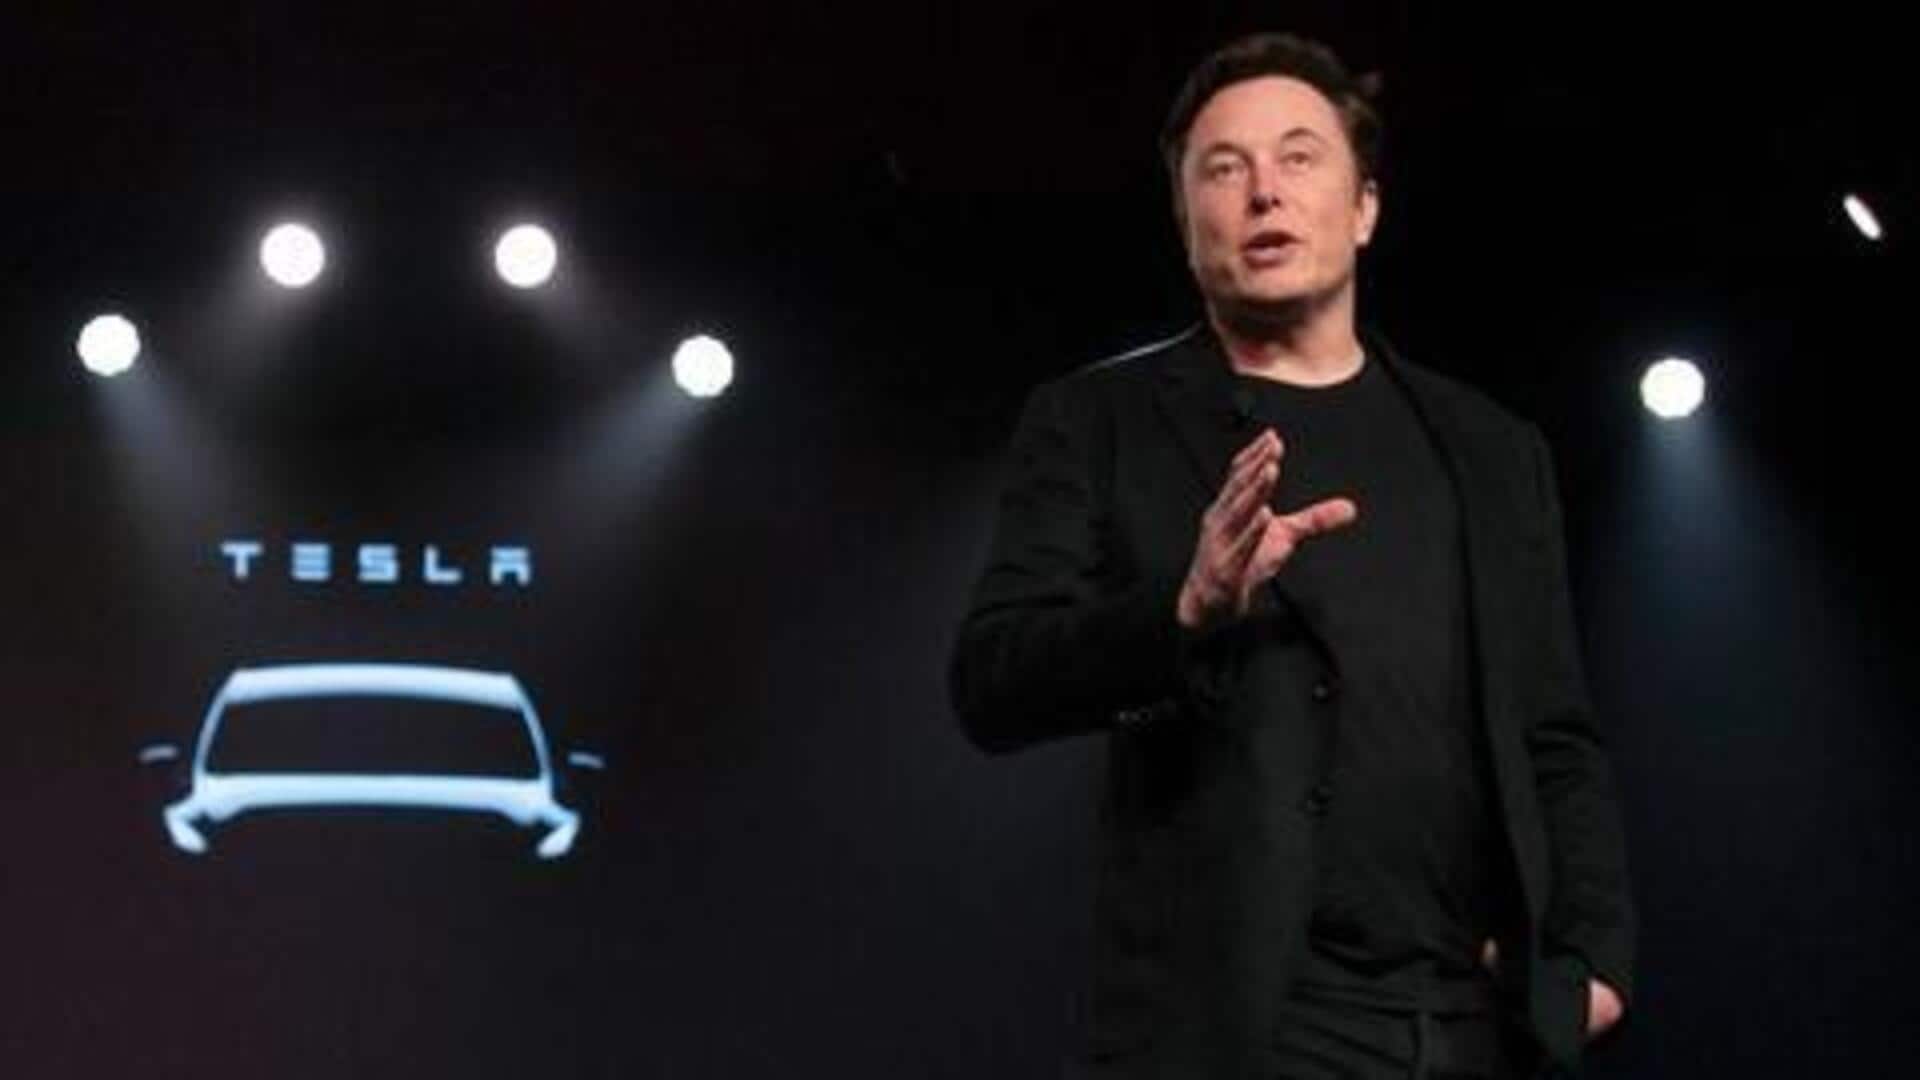 Tesla shareholders re-approve Elon Musk's $56 billion pay package